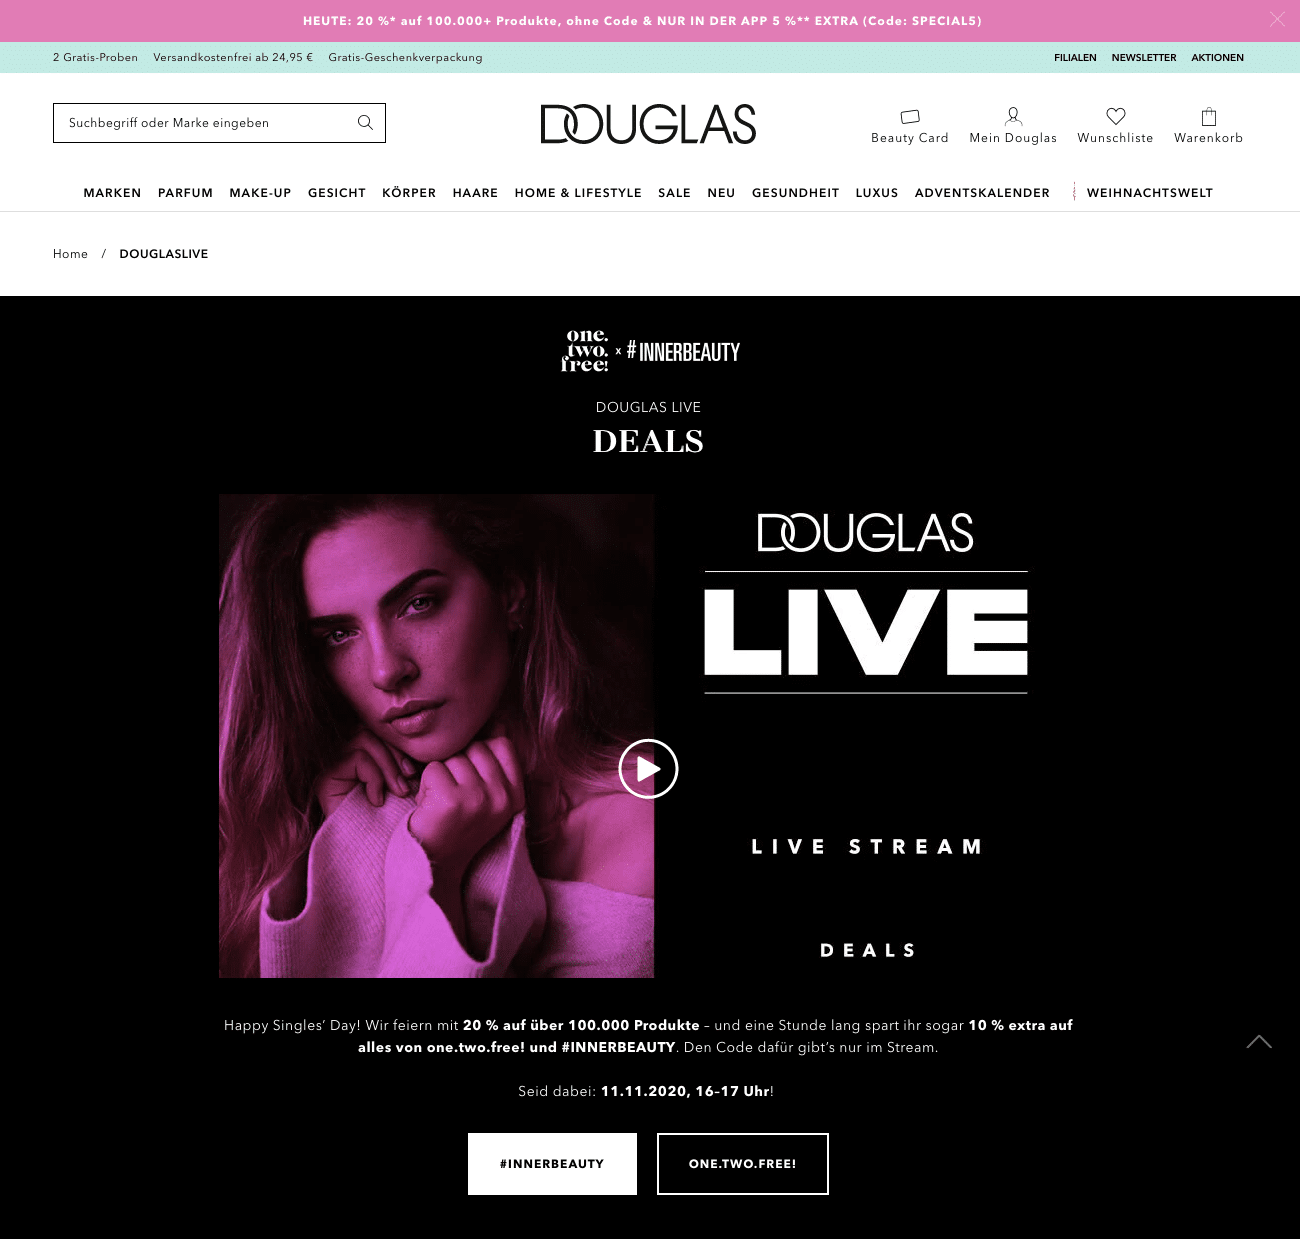 Douglas live singles day